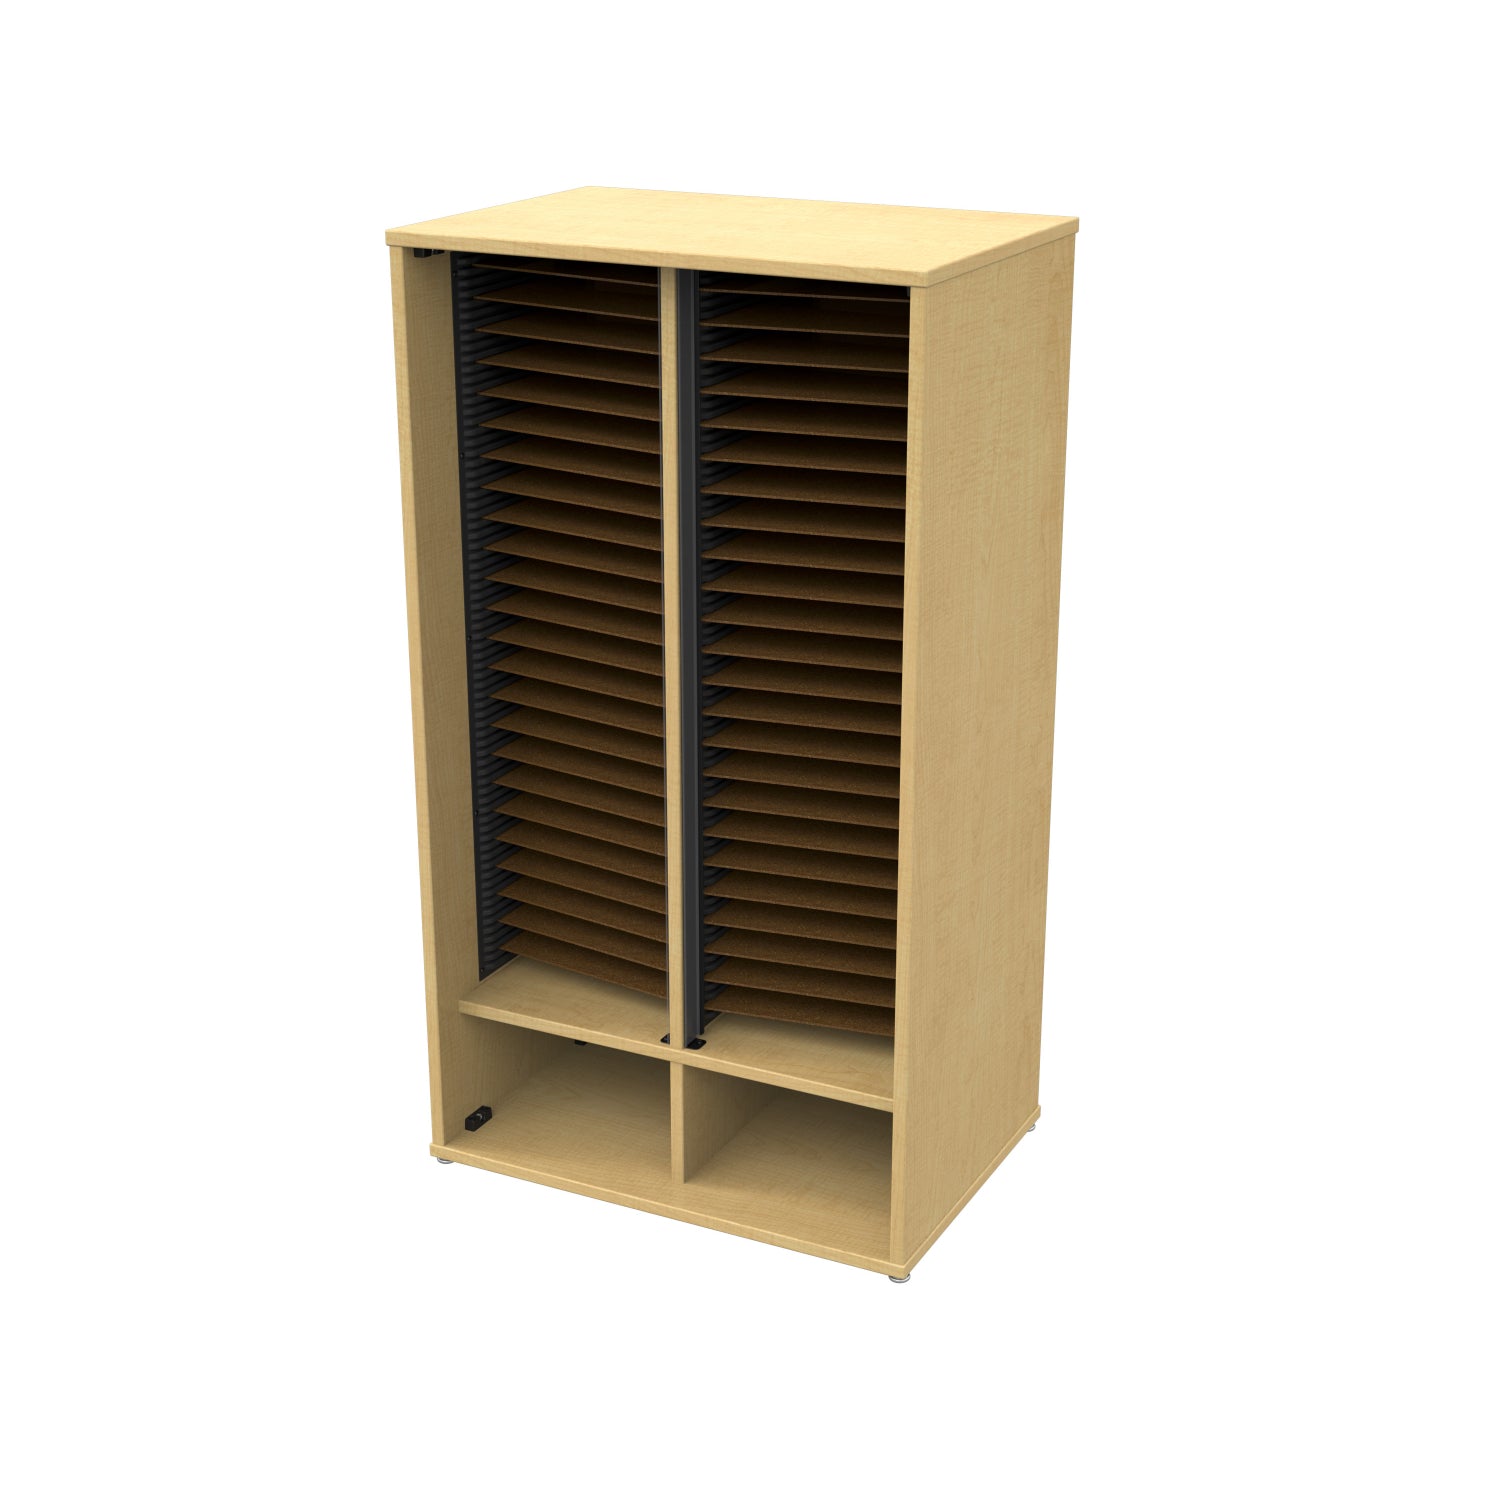 Bandstor™ 2 Compartment Choral Folio Cabinet, 52 Shelves, No Door